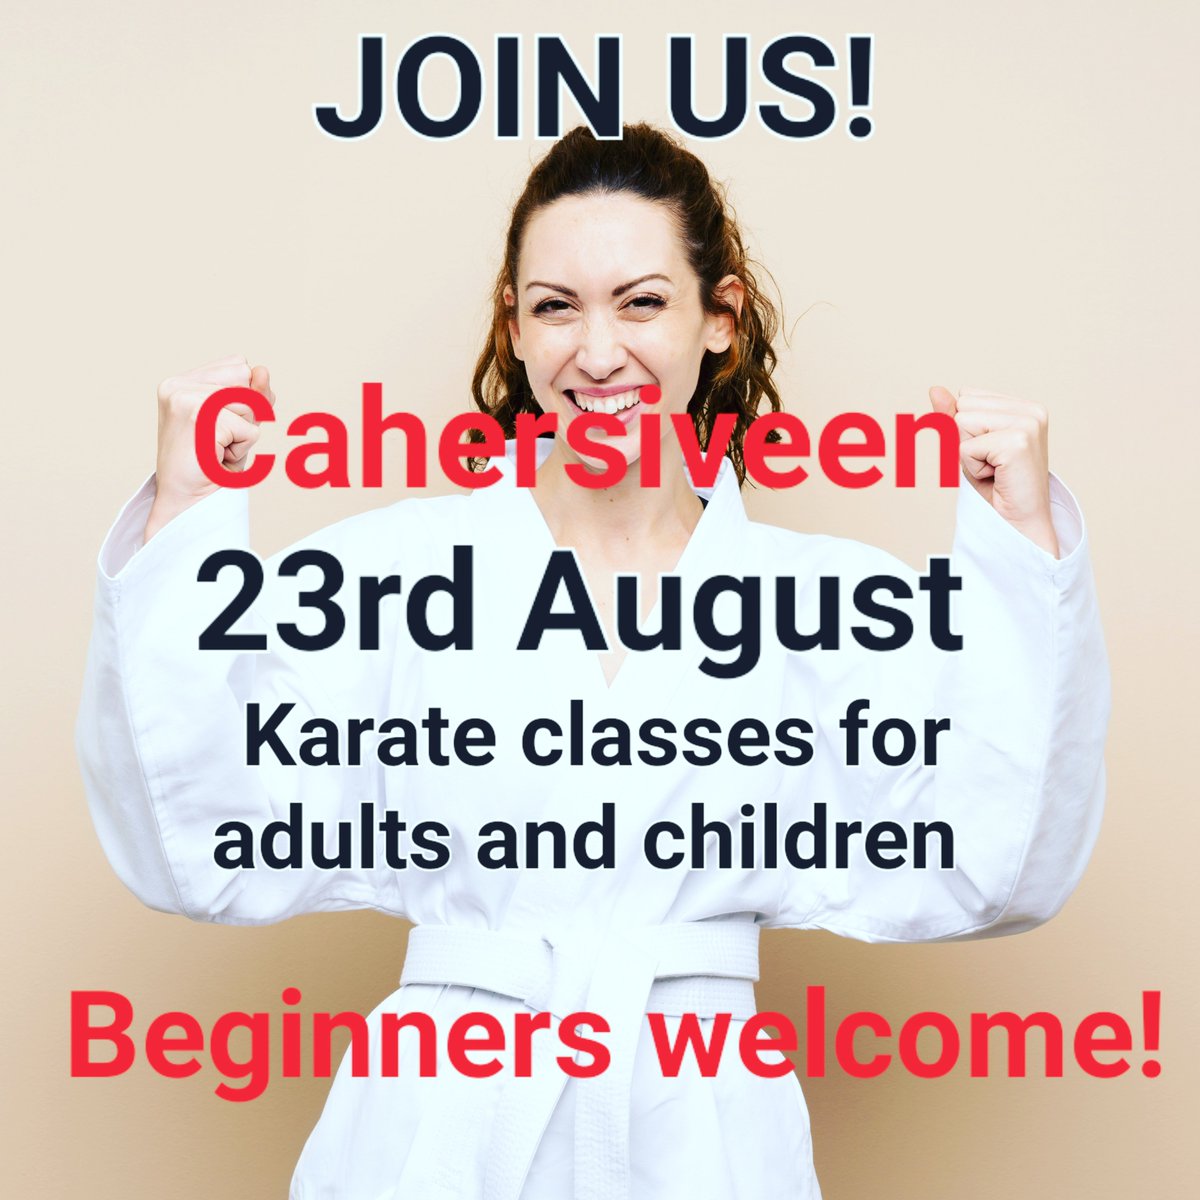 Looking forward to starting karate classes in Cahersiveen Community Resource Centre tomorrow evening at 7:00.
Beginners welcome 👊 

#karate #Cahersiveen #skelligscoast